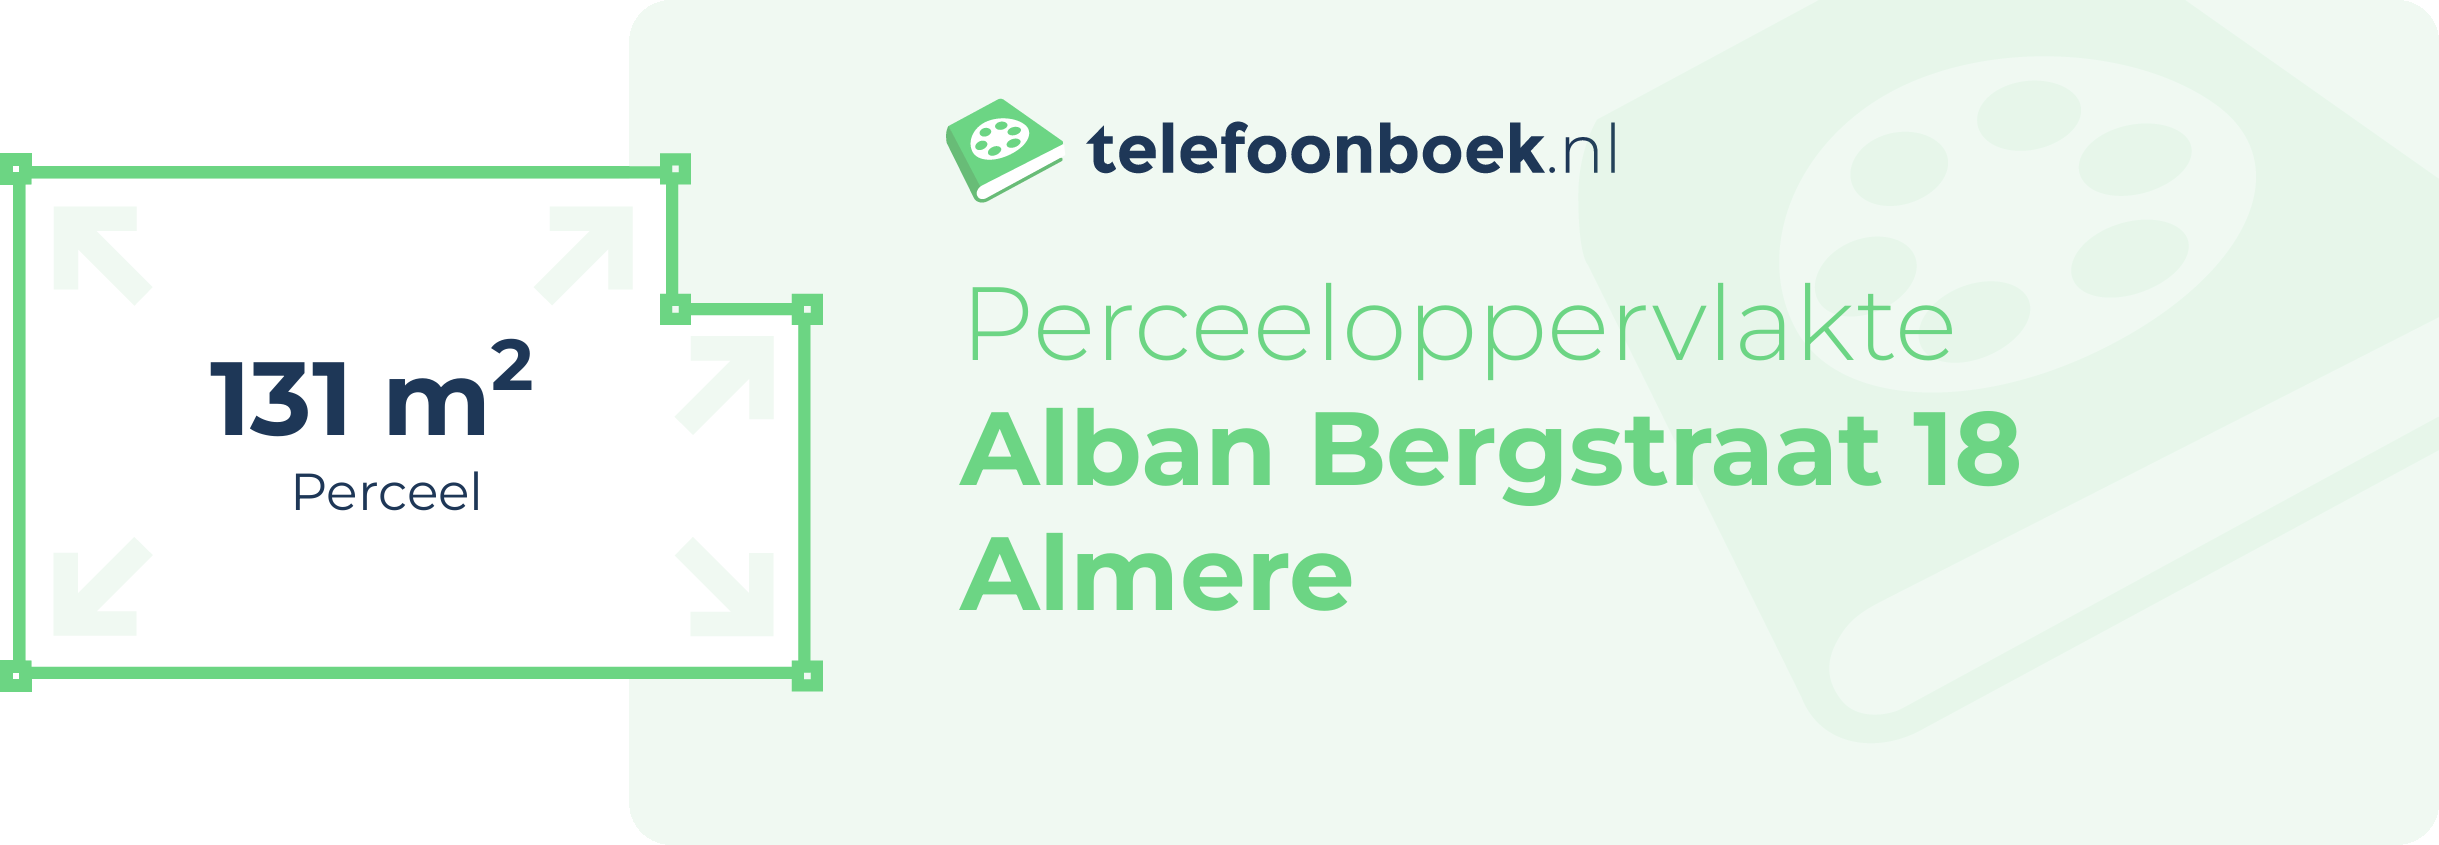 Perceeloppervlakte Alban Bergstraat 18 Almere